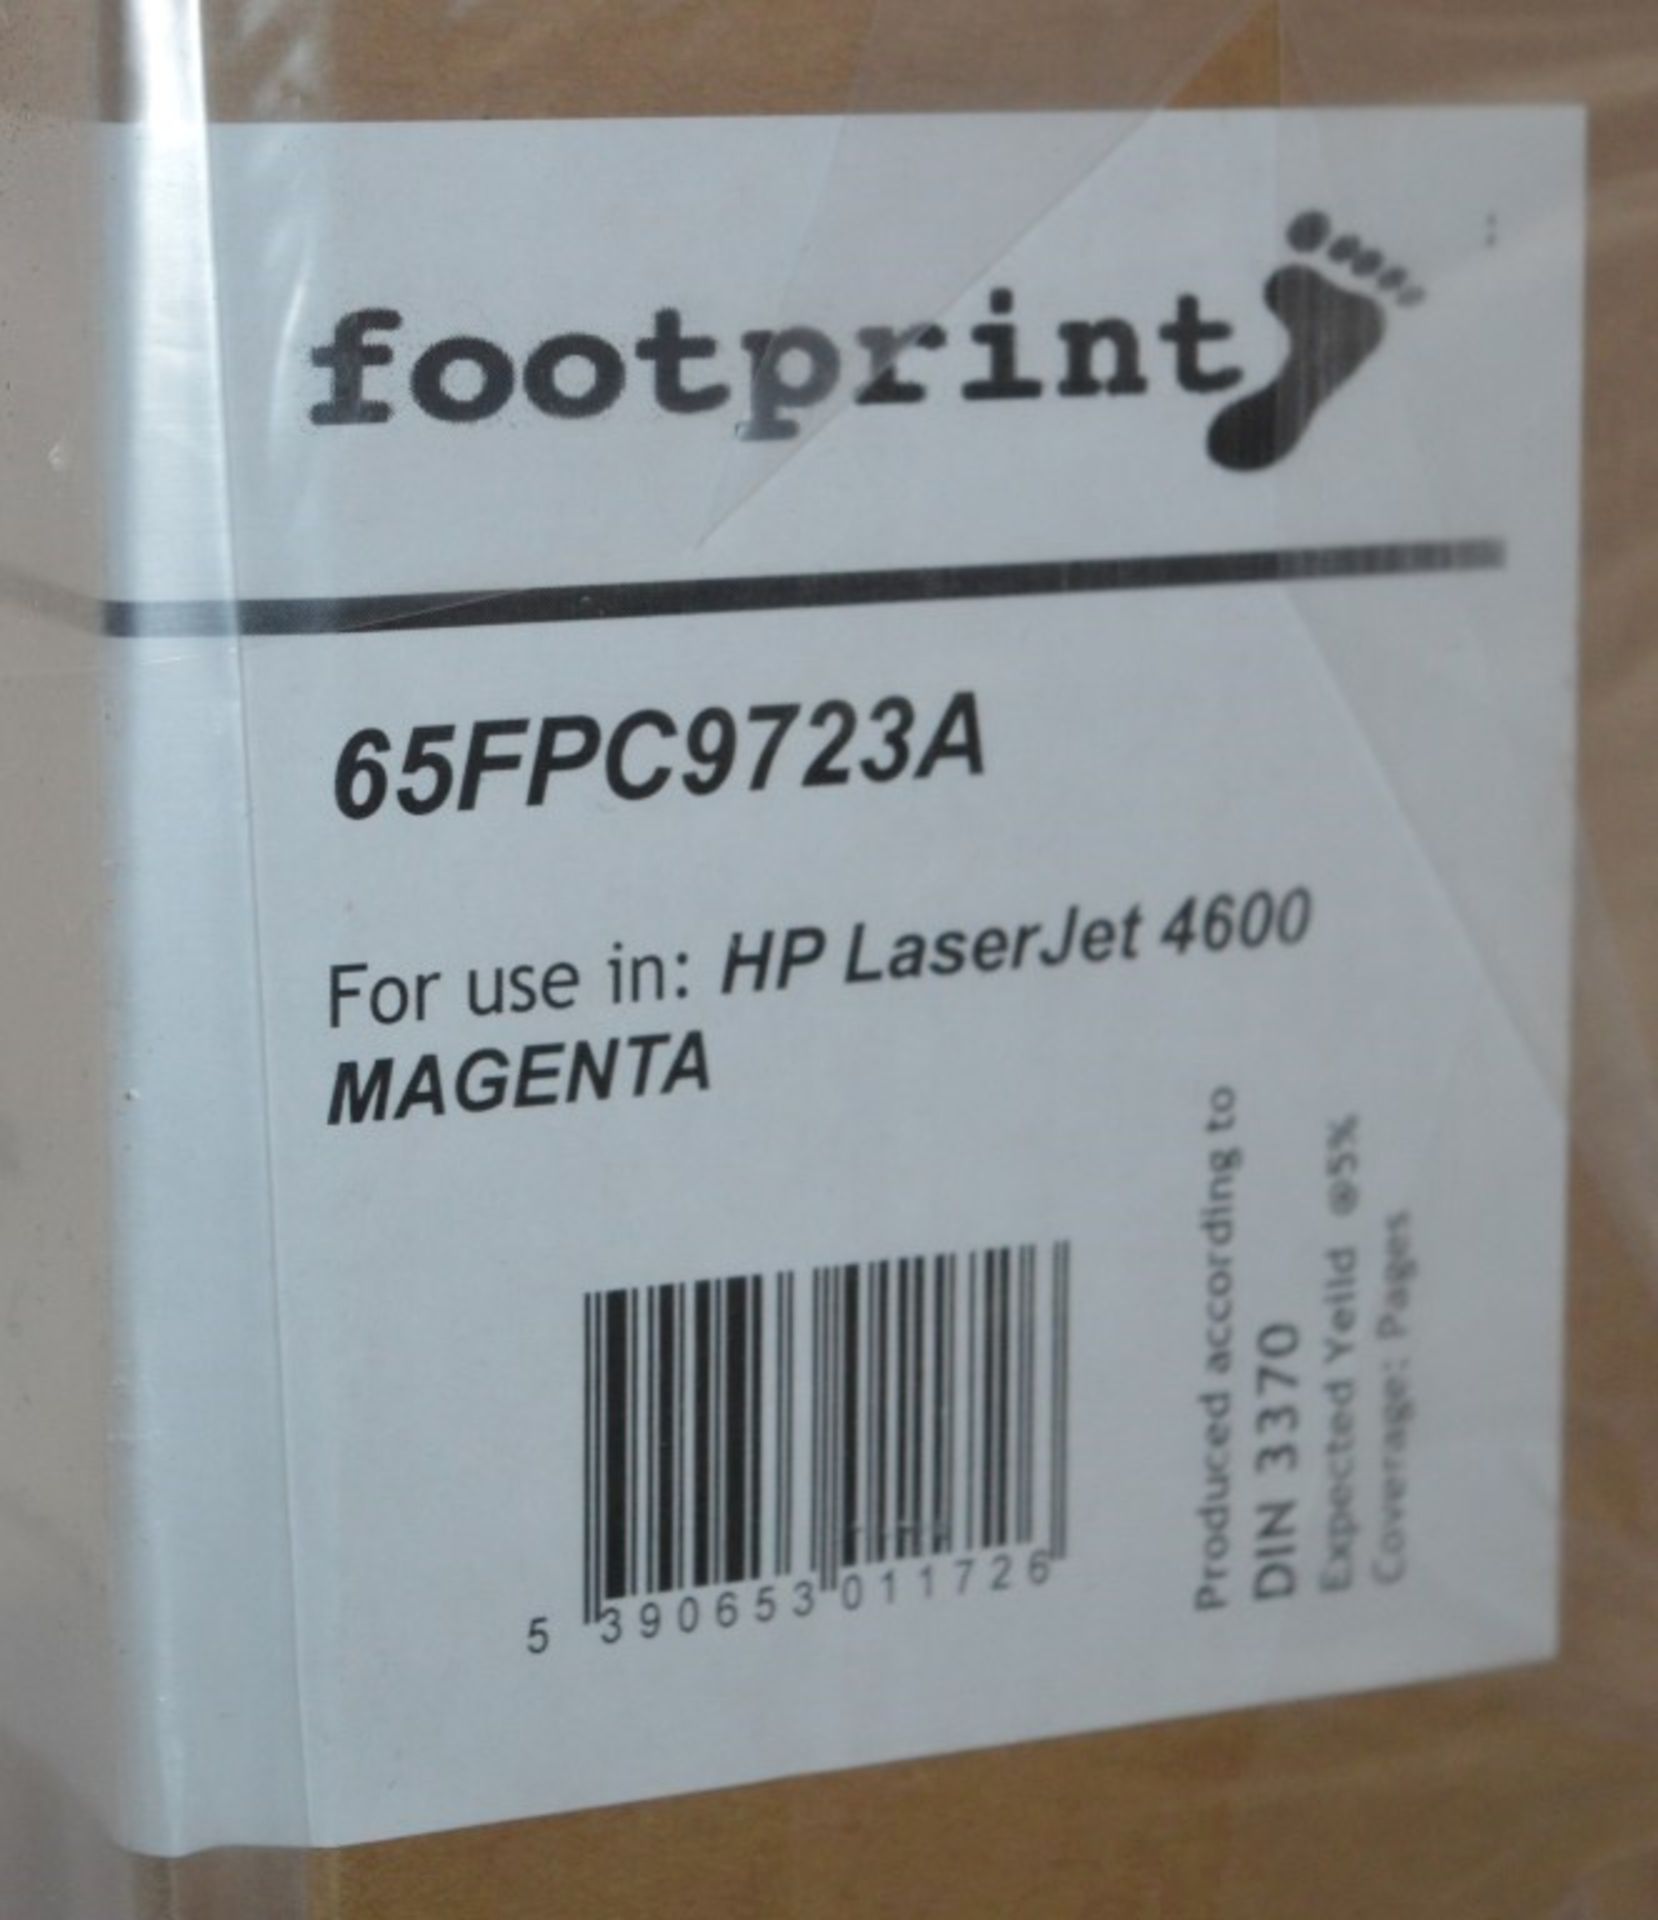 1 x Footprint Third Party HP 4600 Lasterjet Toner Cartridge MAGENTA - Genuine Boxed Sealed Stock - - Image 2 of 2